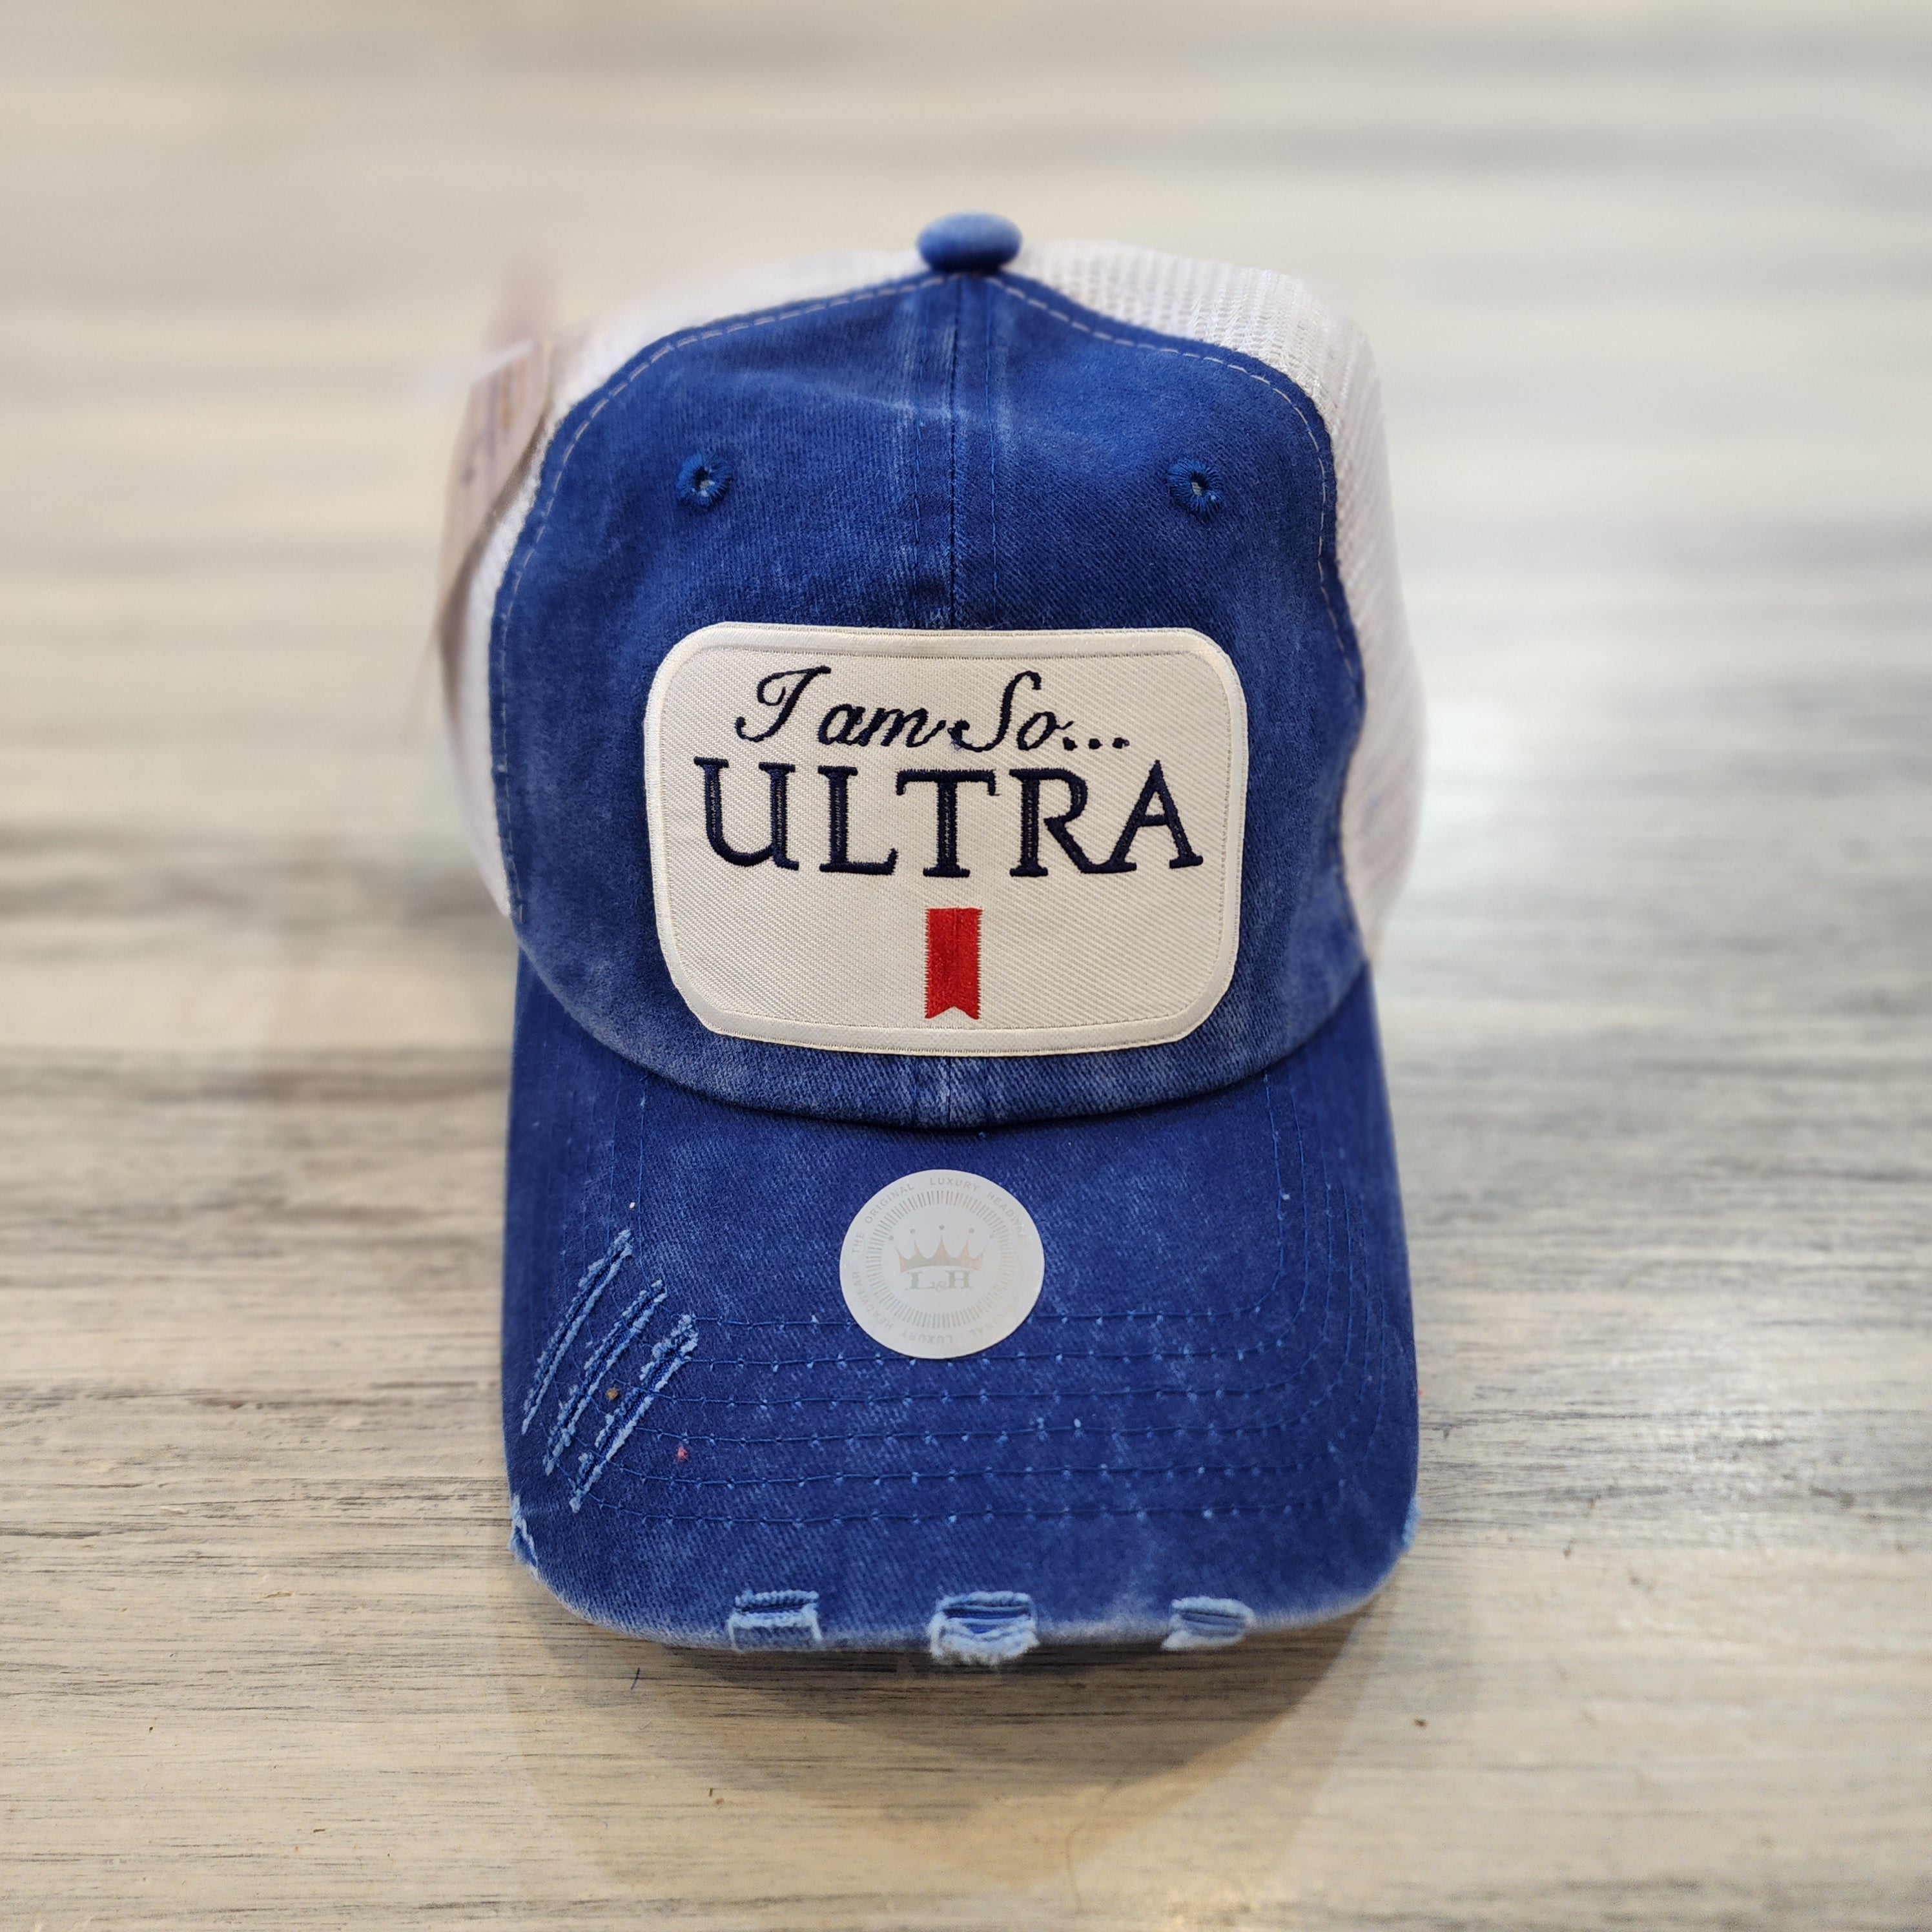 I am So ULTRA Baseball Hat More Colors